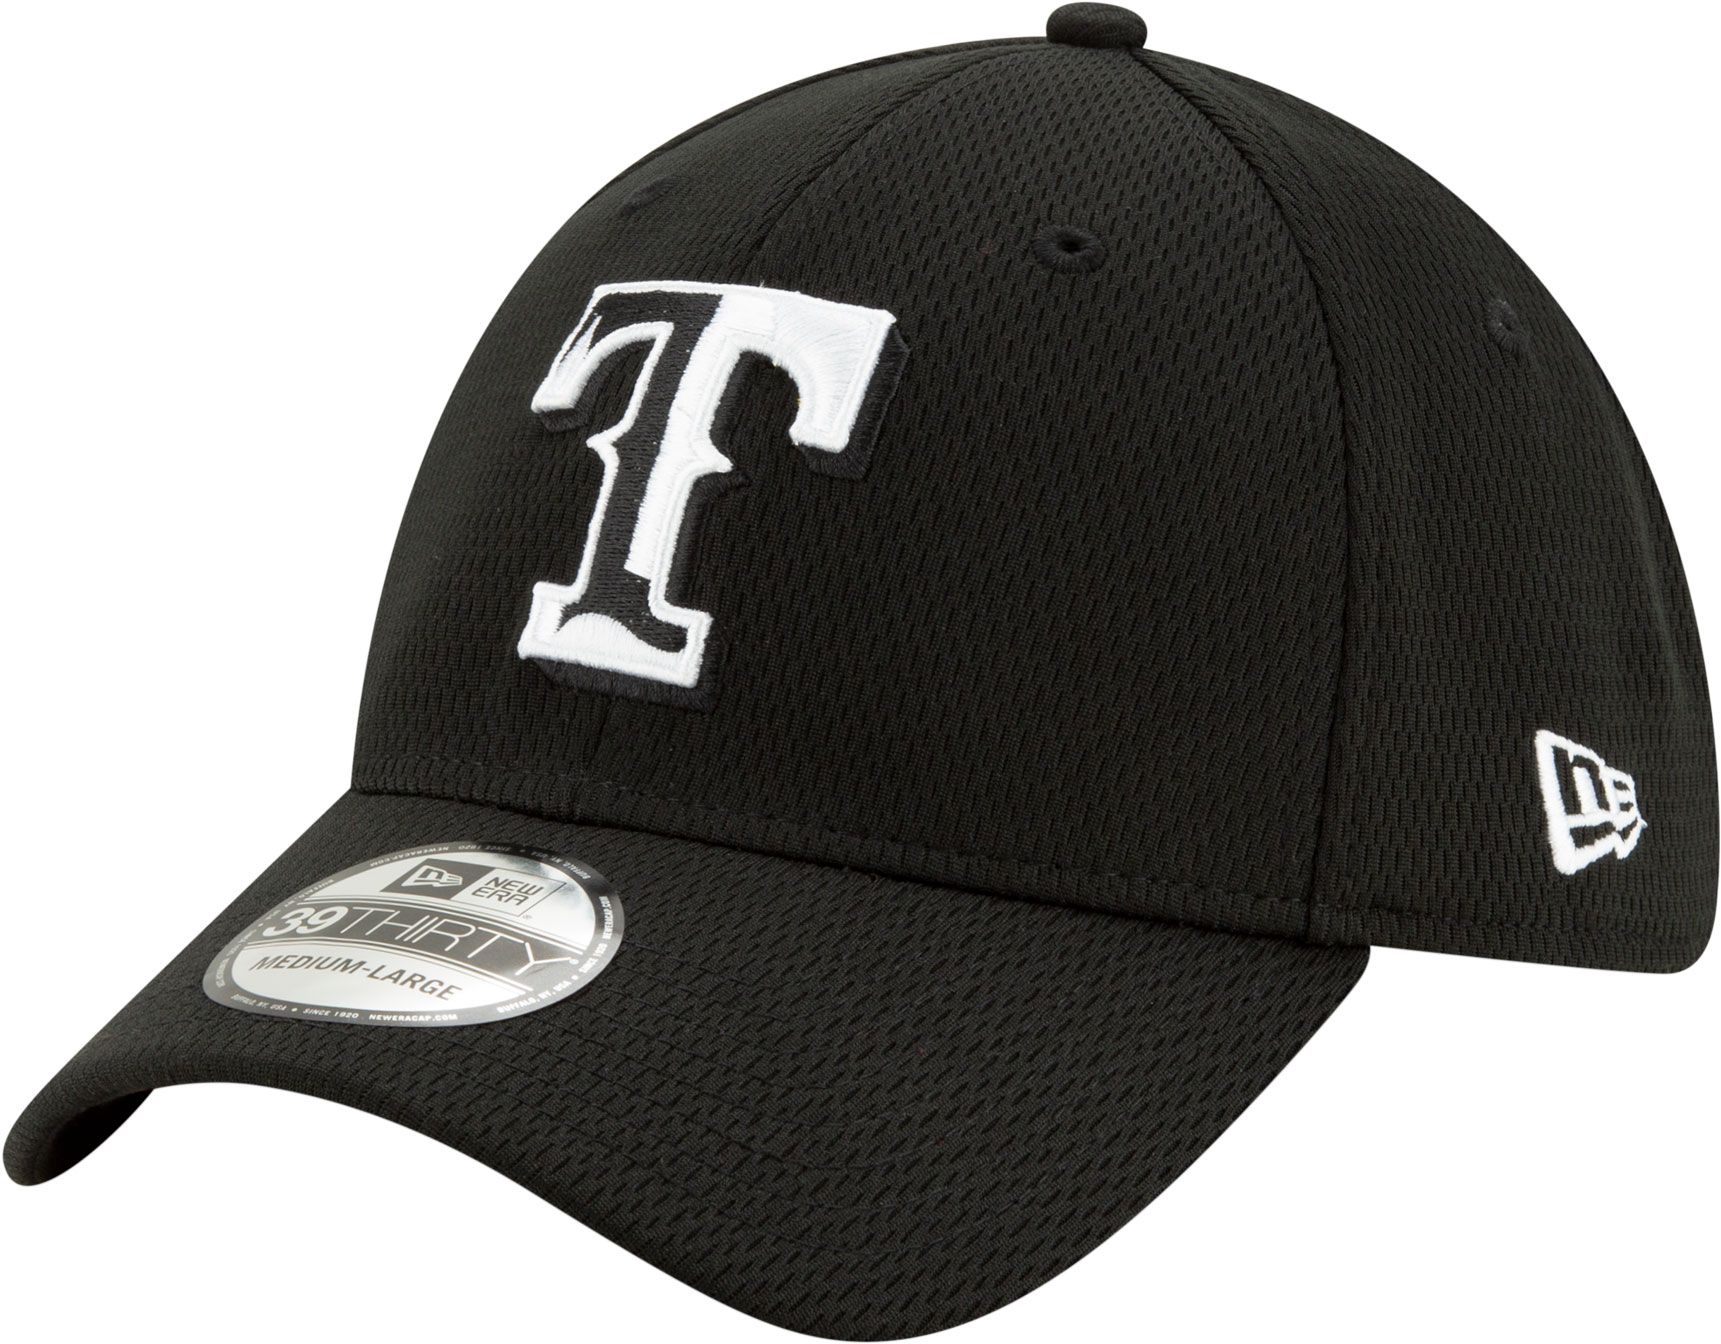 Men's Texas Rangers New Era Camo Trucker 9FIFTY Snapback Hat